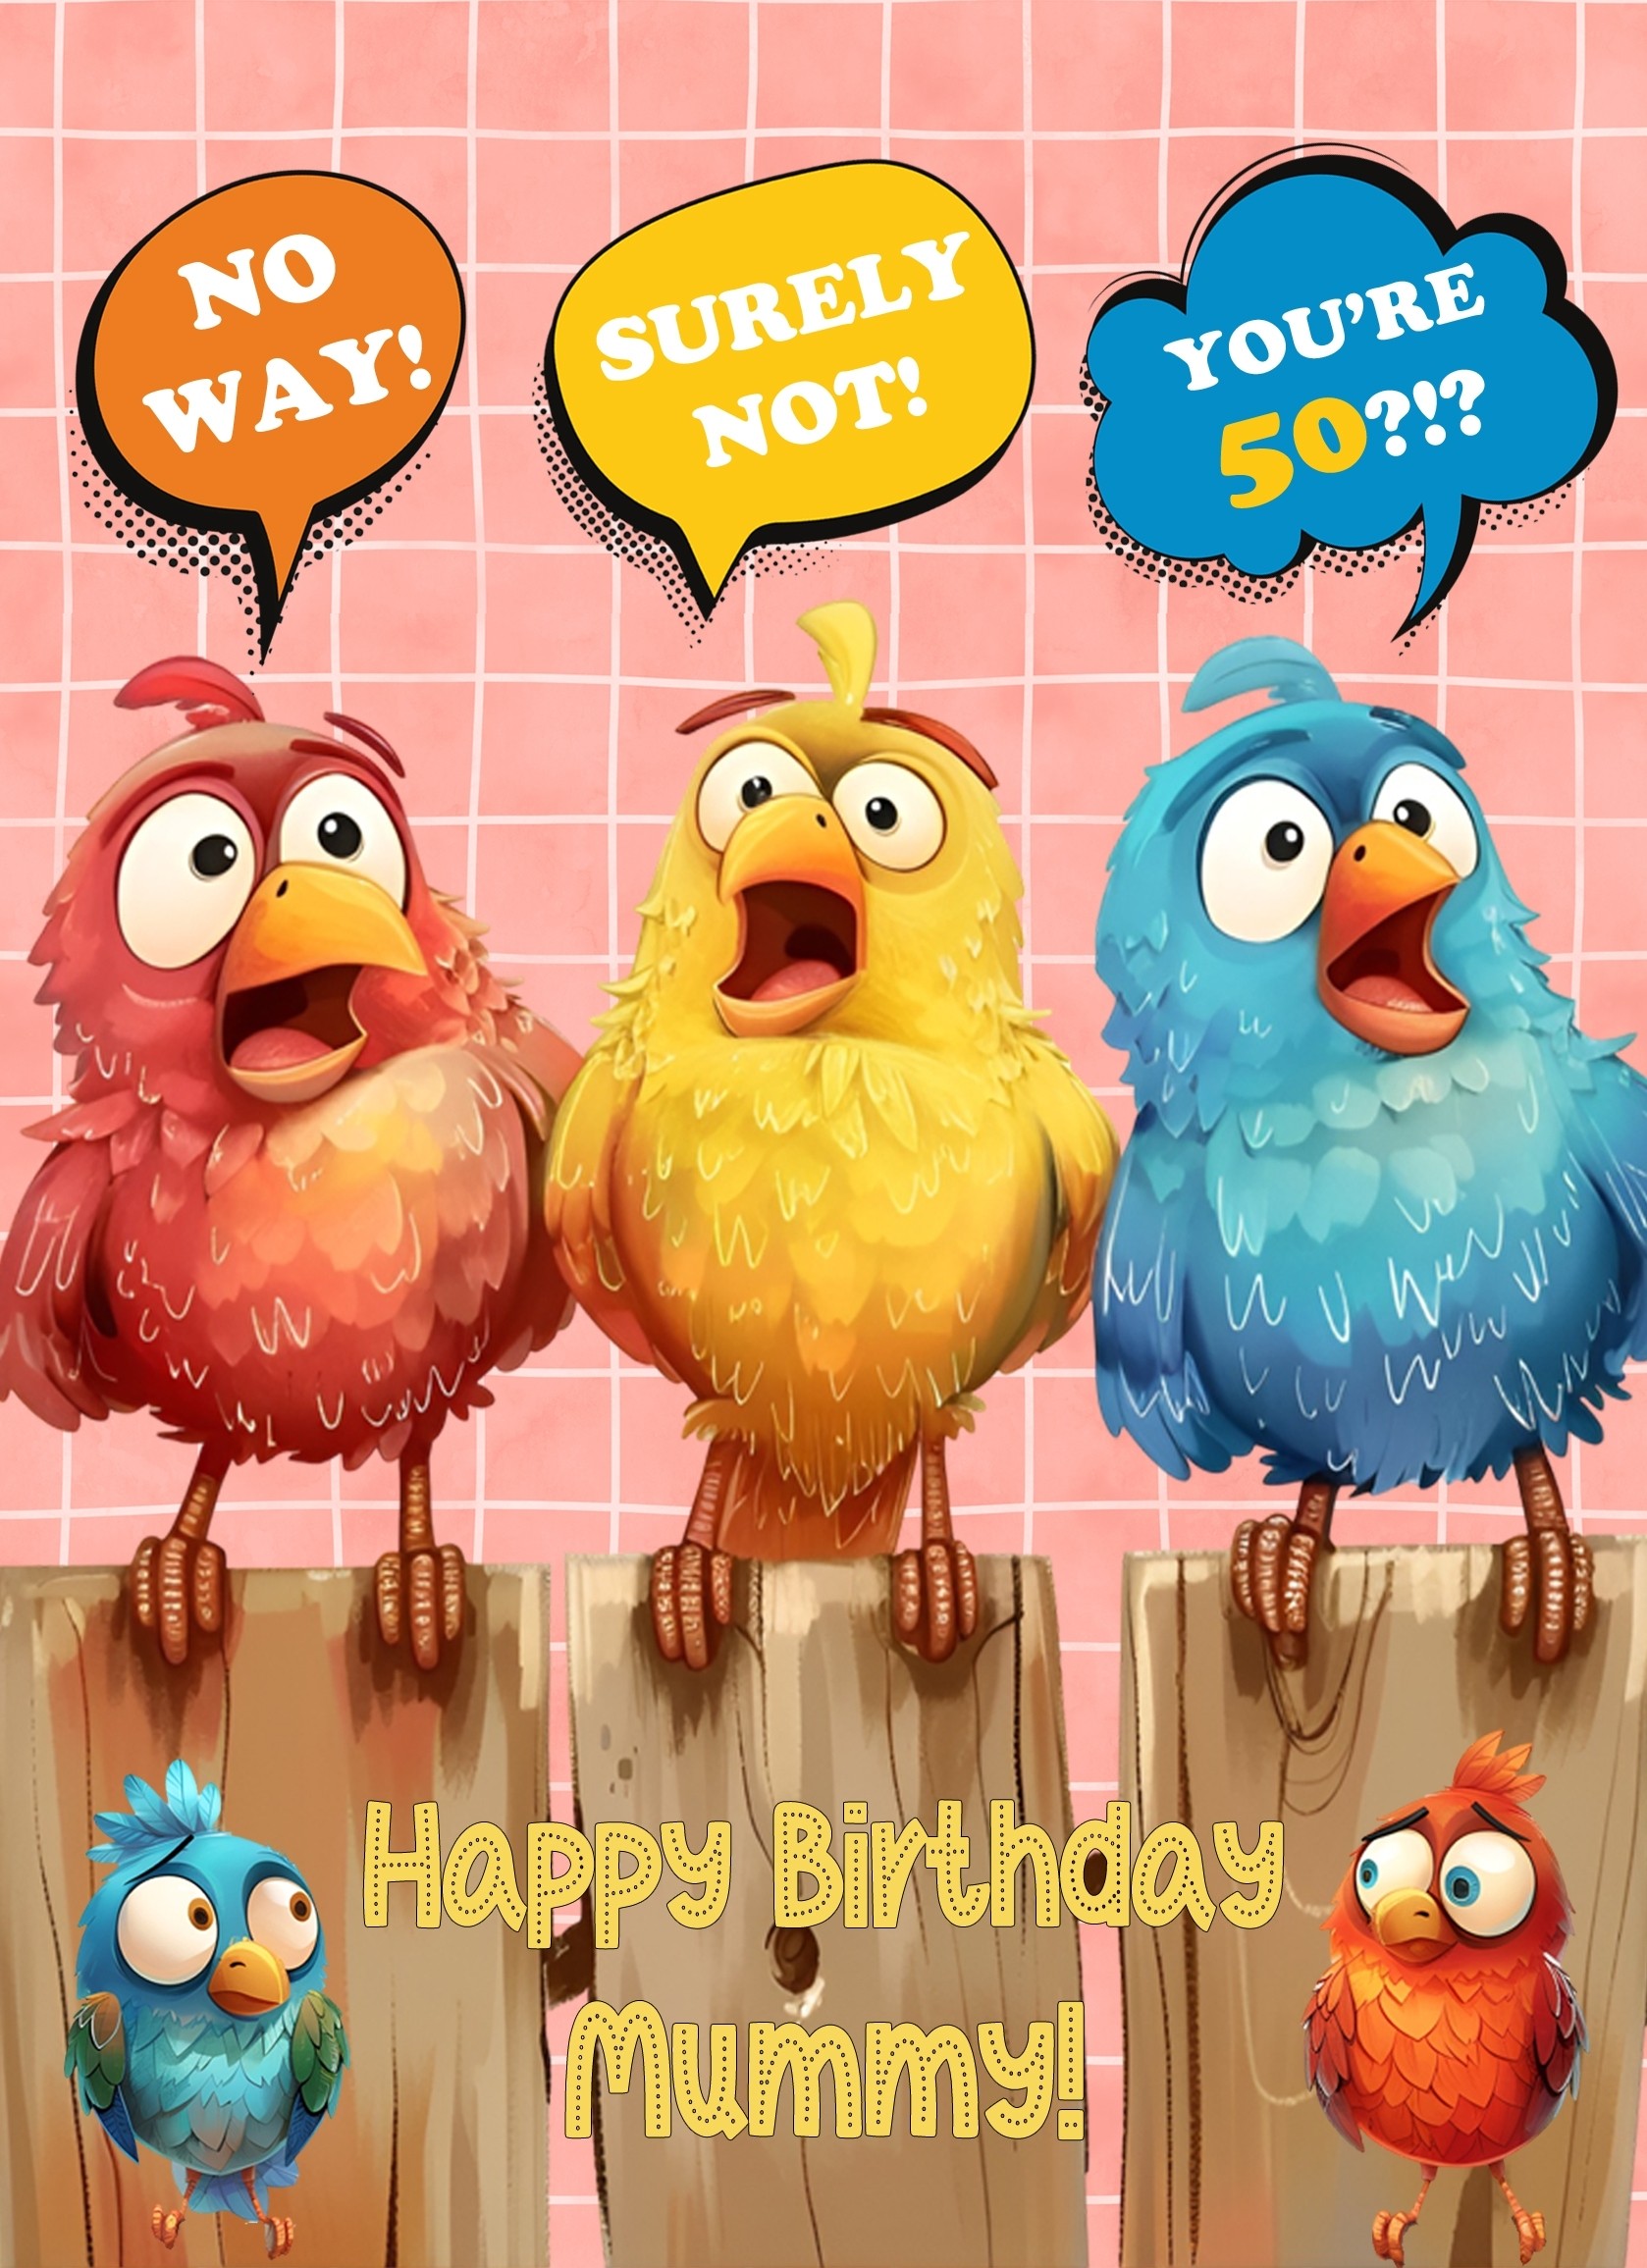 Mummy 50th Birthday Card (Funny Birds Surprised)